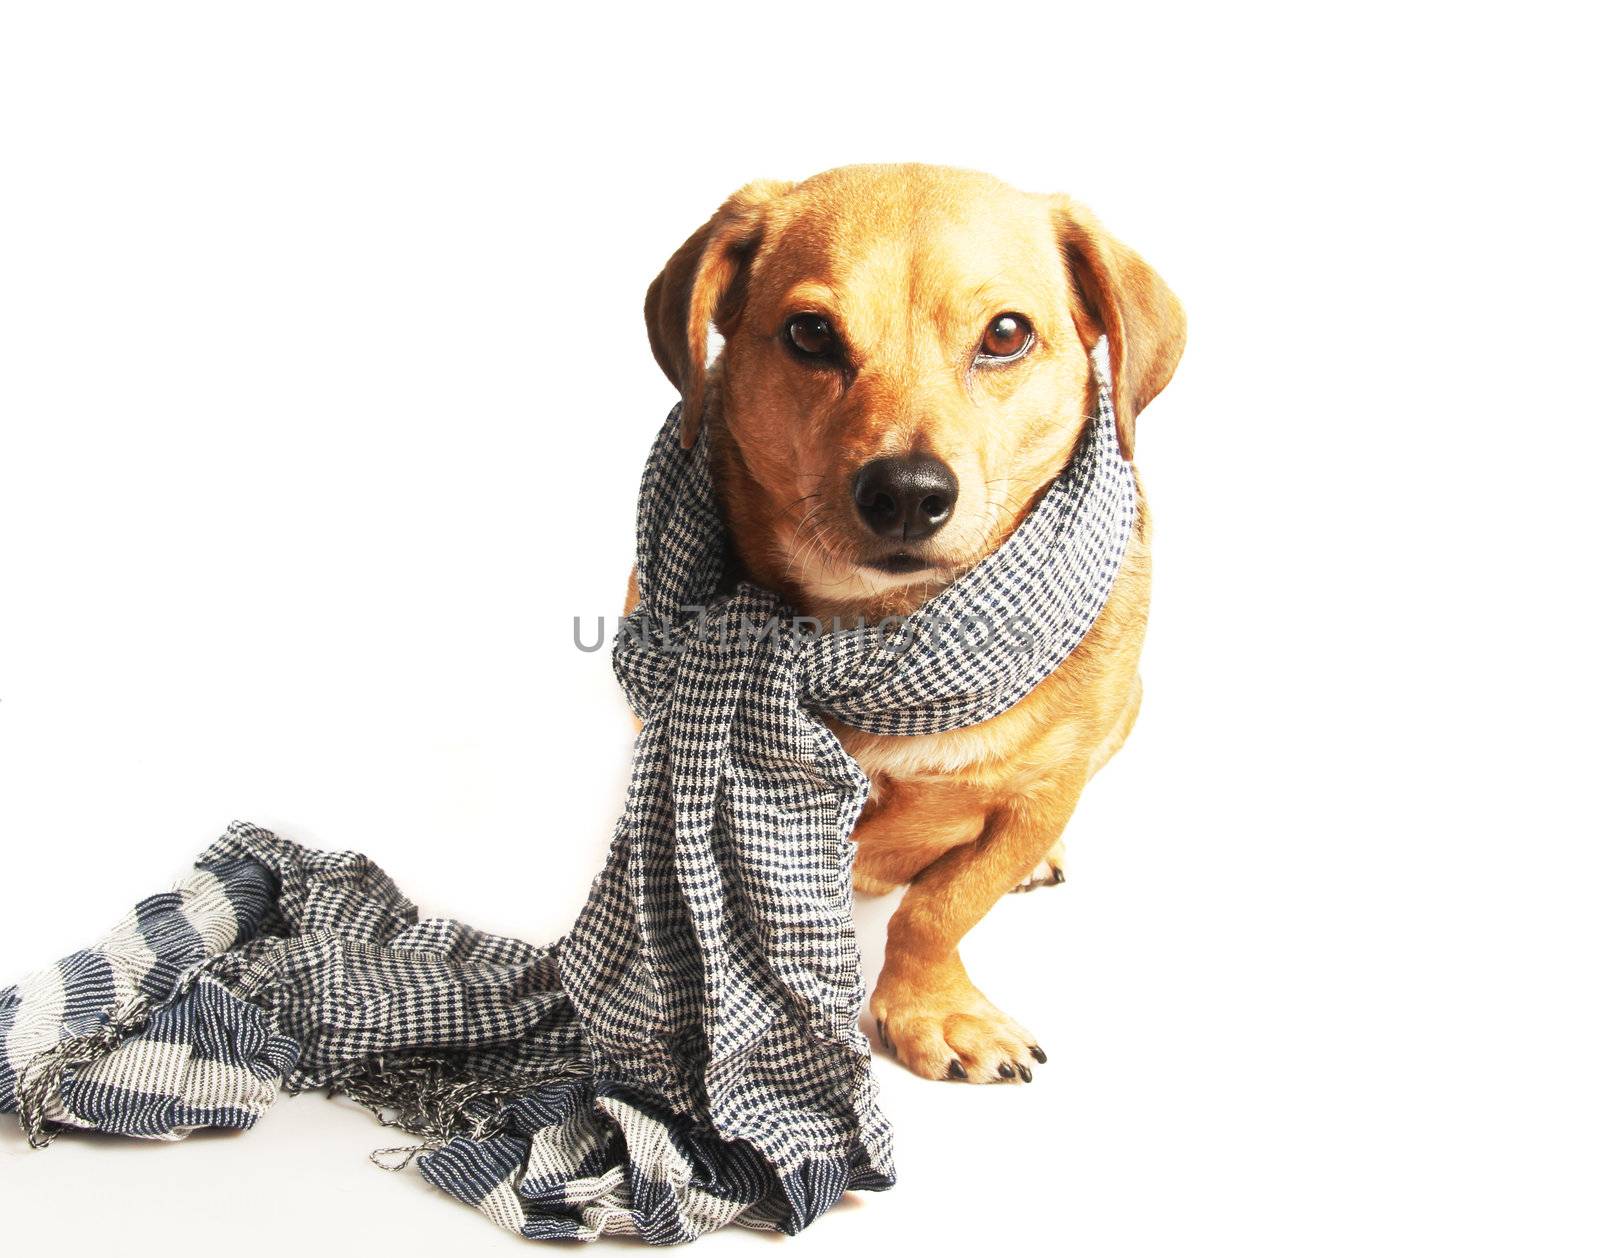 dog and scarf by danilobiancalana